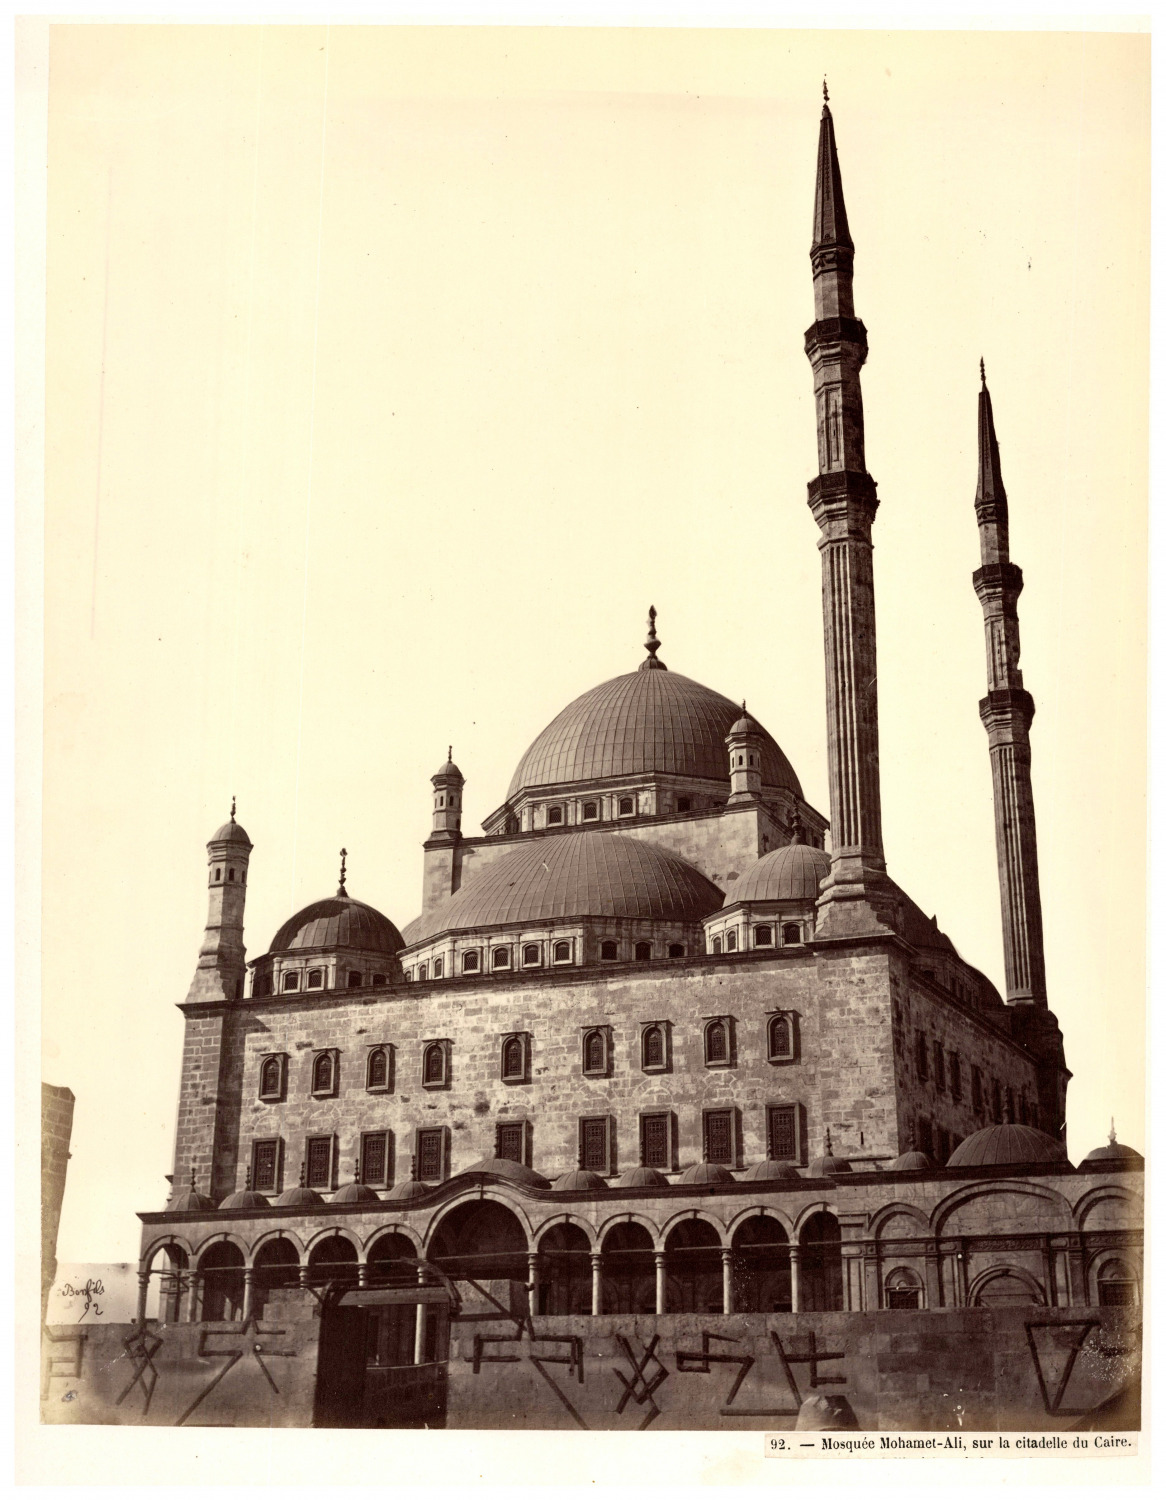 Egypt, Bonfils le Cairo, Mohammed Ali Mosque Vintage Print, Albumin Print 